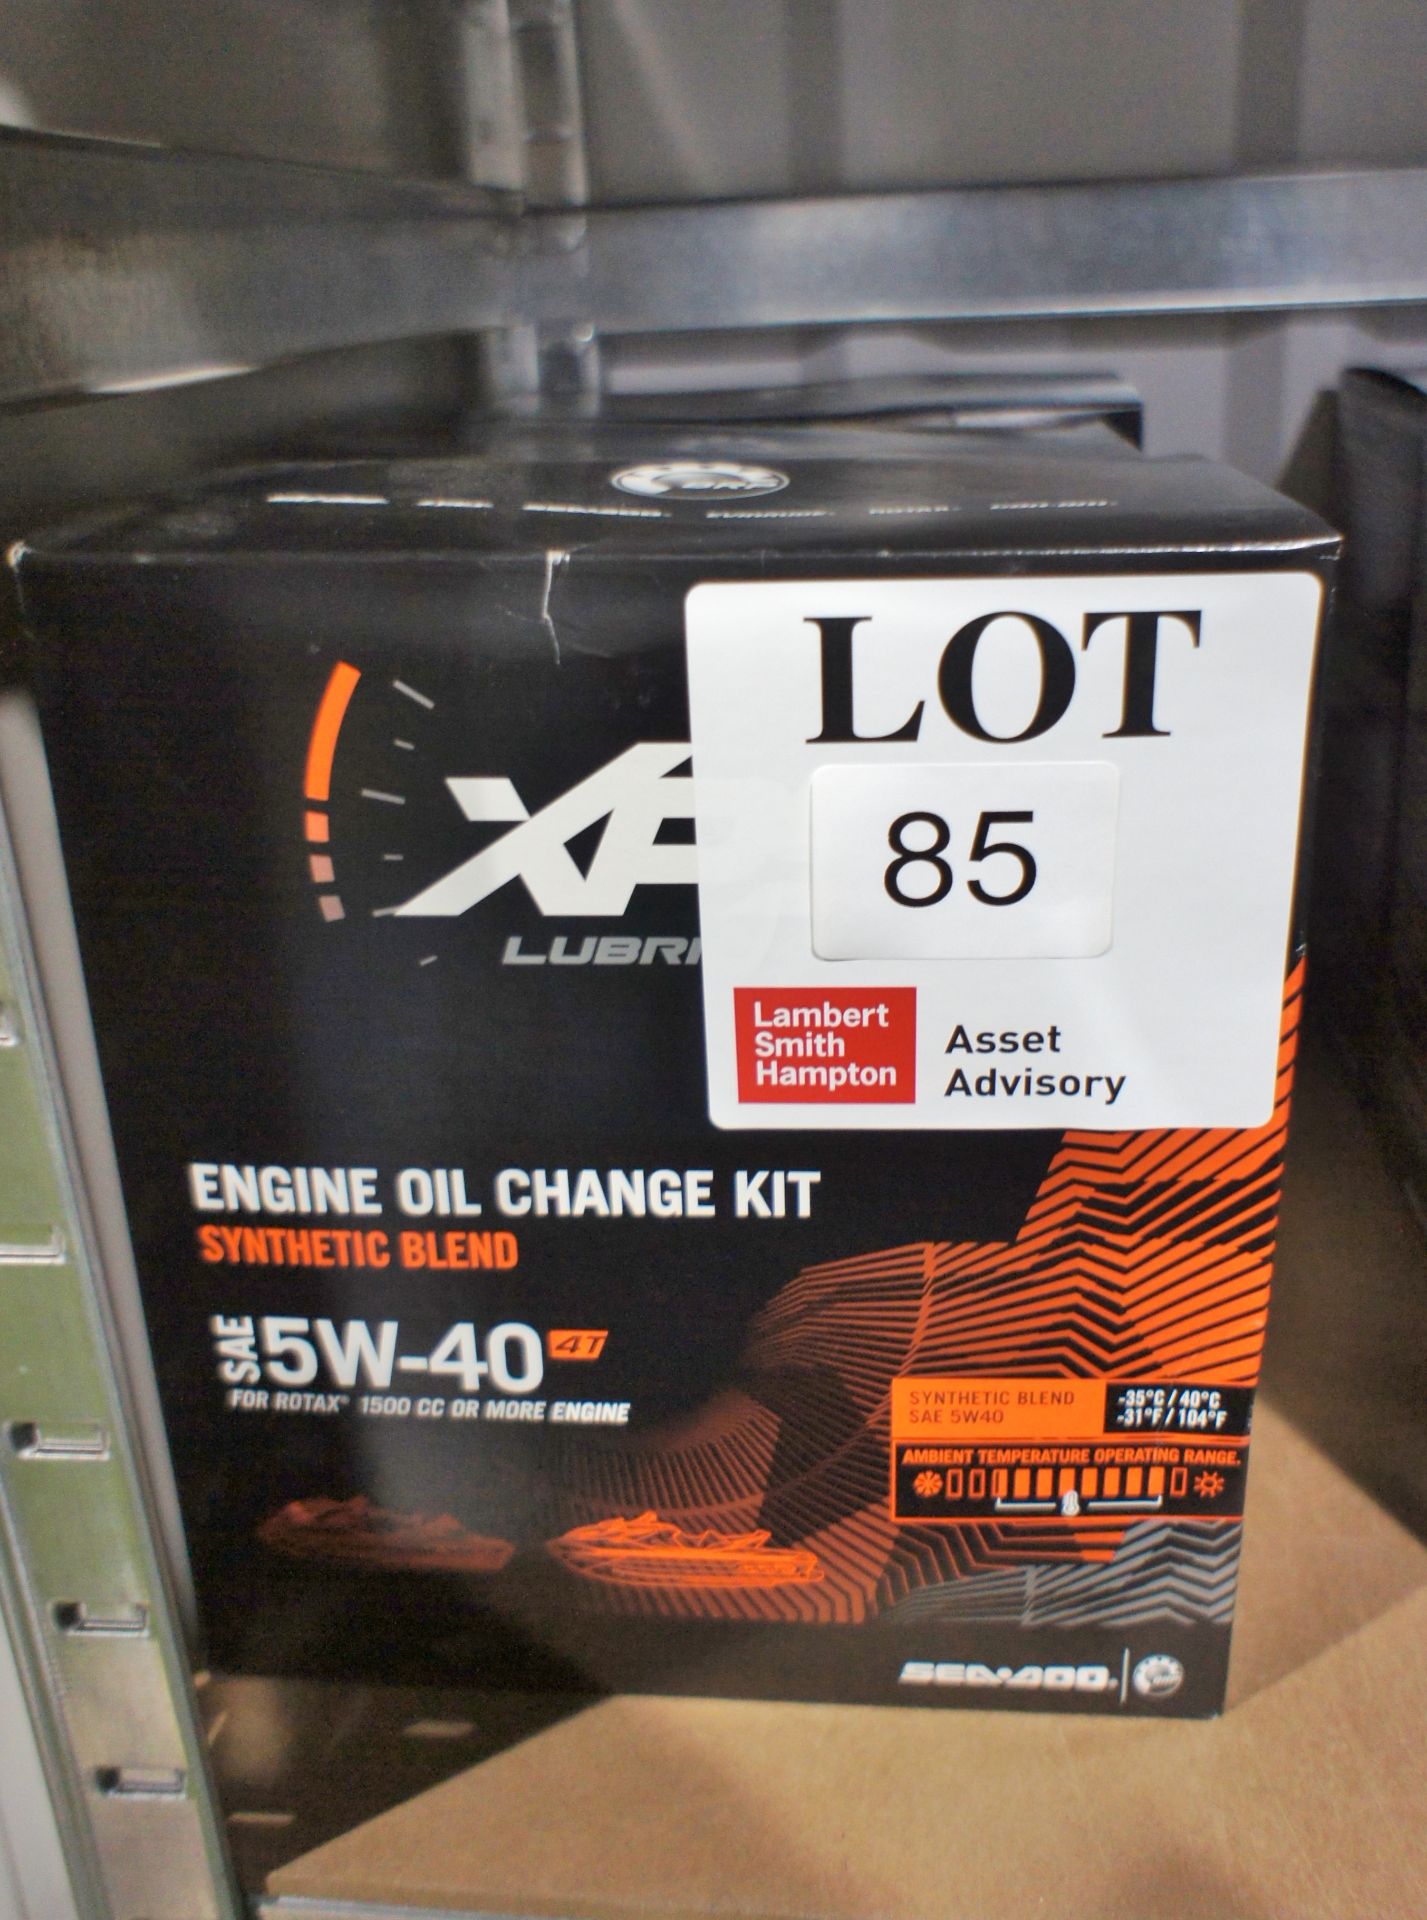 3 x XPS 5W-40 47 engine oil change kits